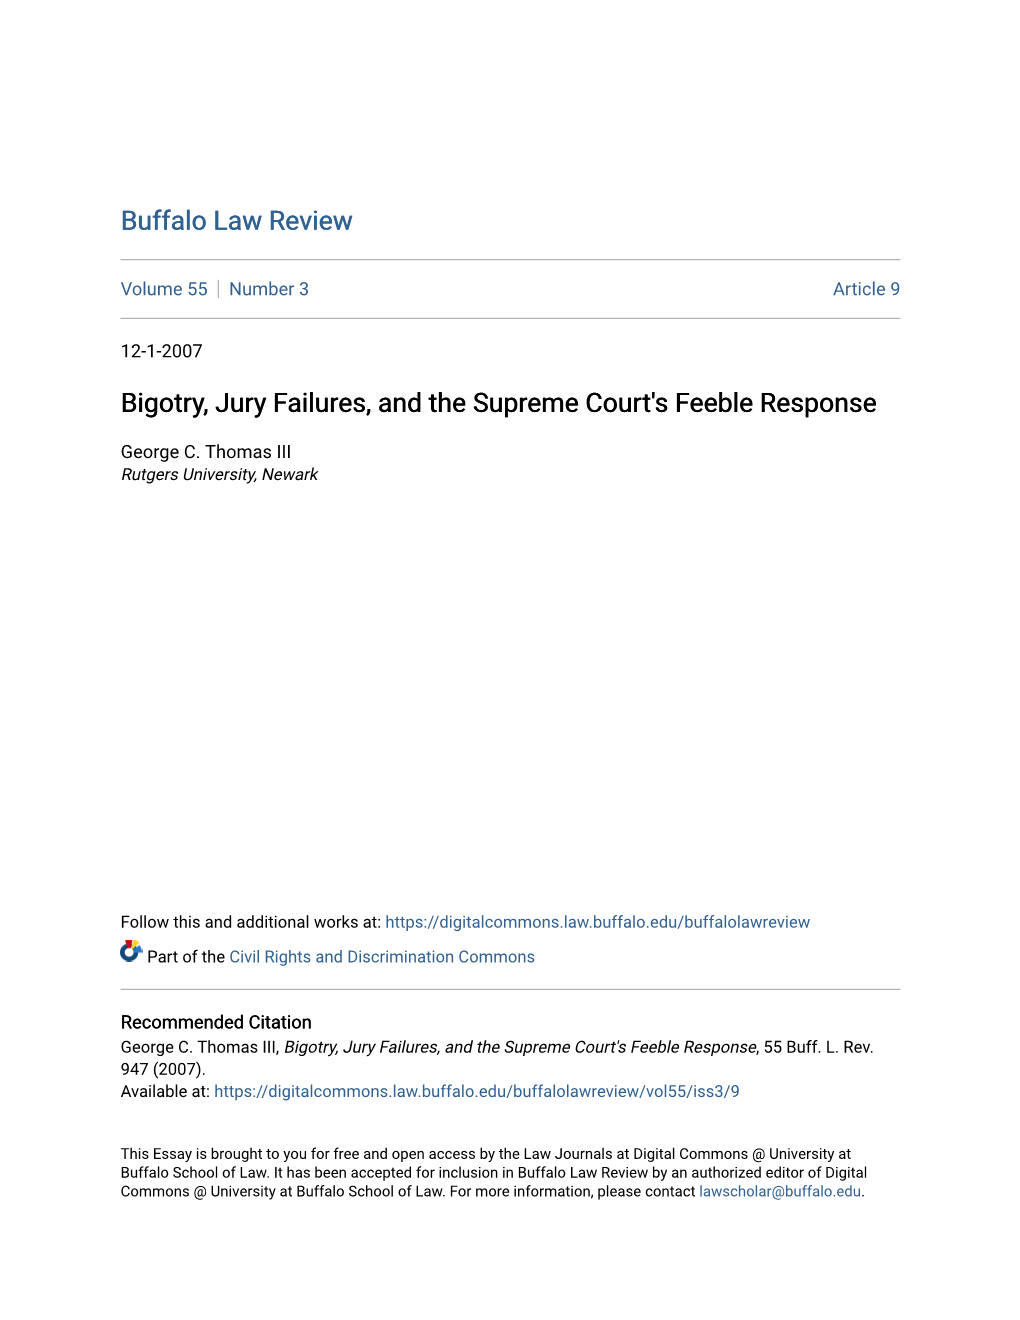 Bigotry, Jury Failures, and the Supreme Court's Feeble Response